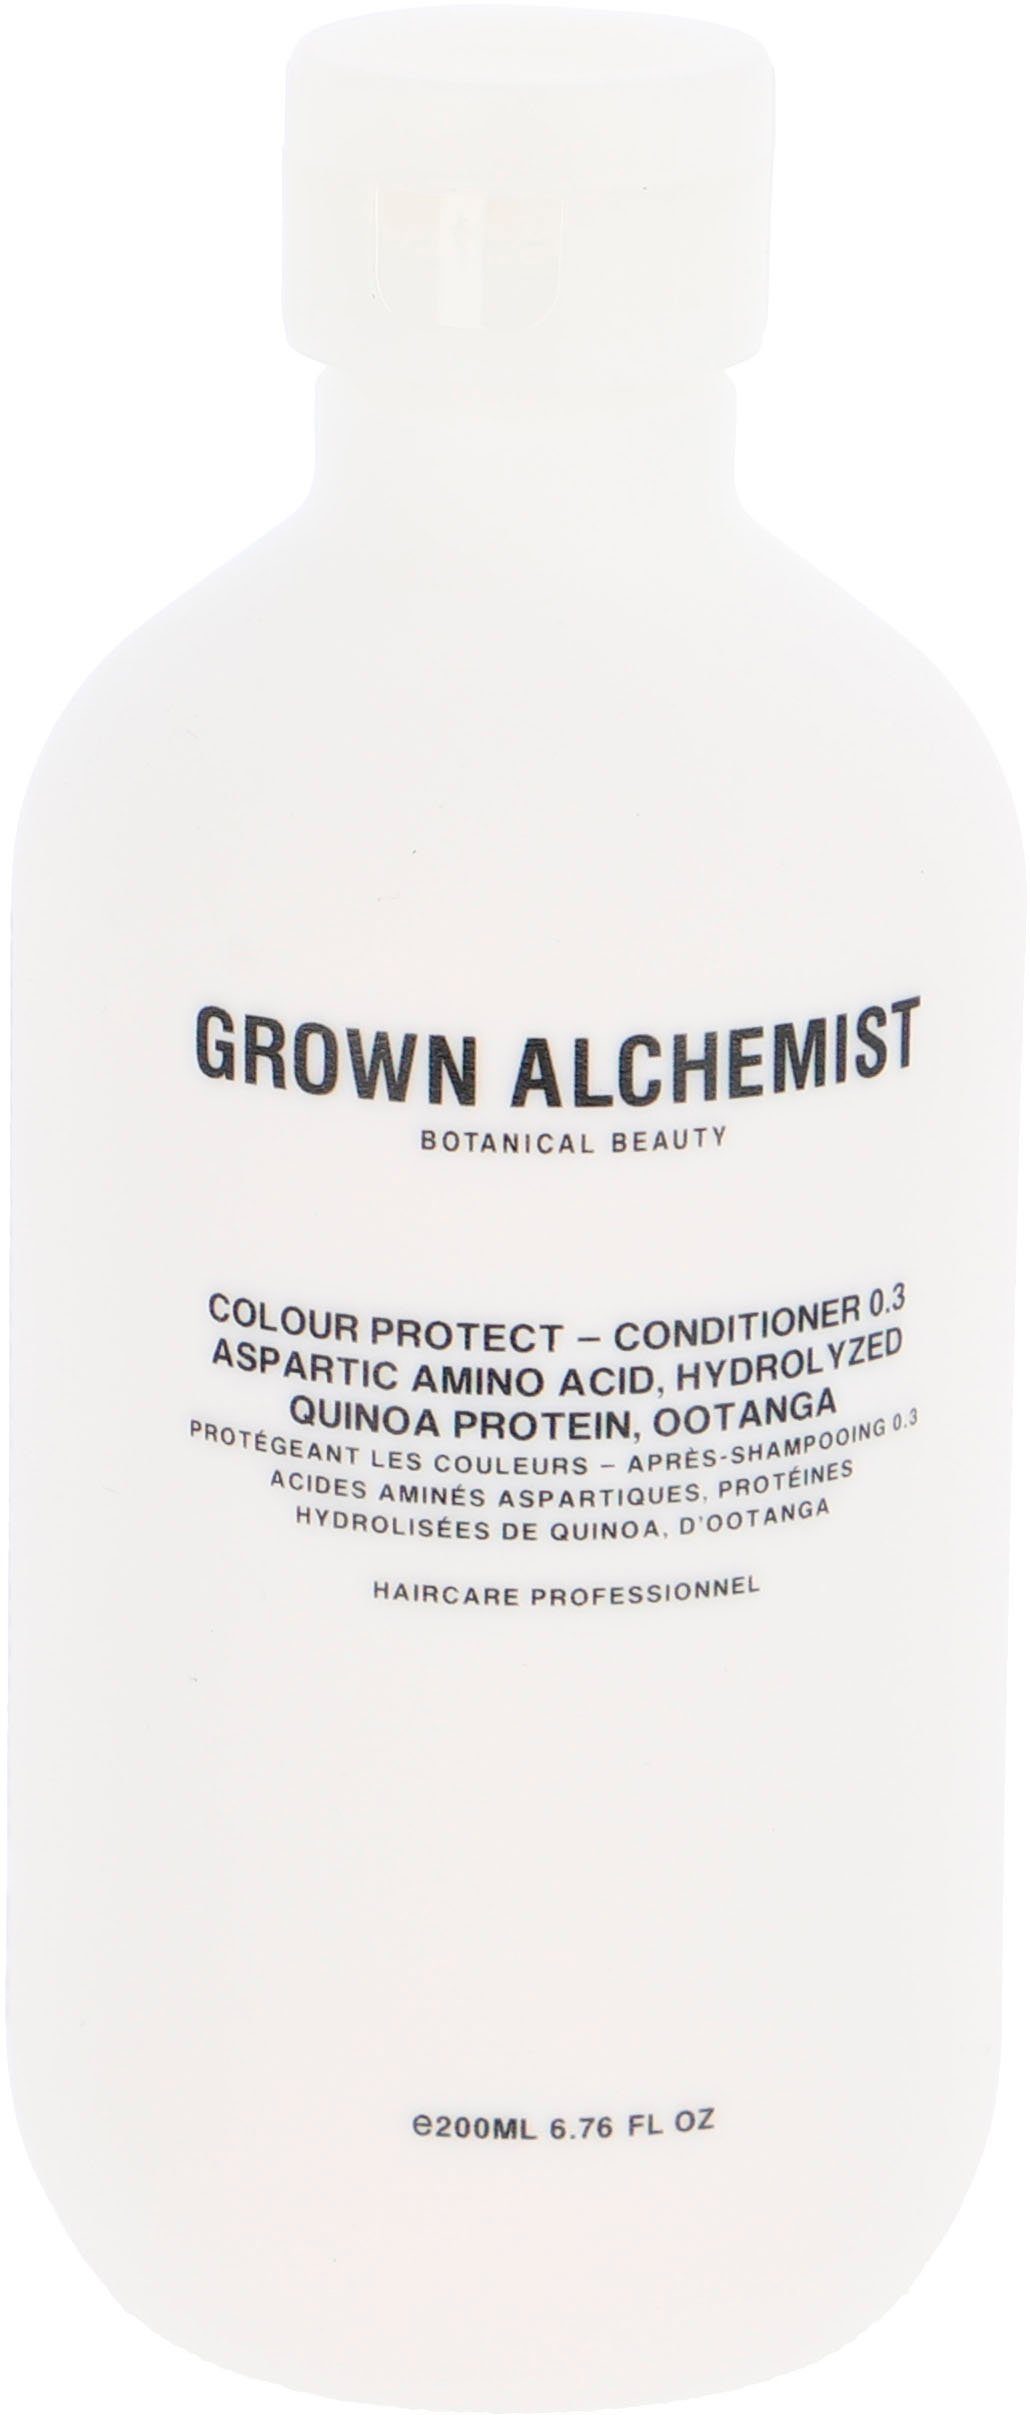 - Amino Protein, Quinoa Ootanga GROWN Hydrolyzed Haarspülung Aspartic Conditioner 0.3, Colour Protect ALCHEMIST Acid,